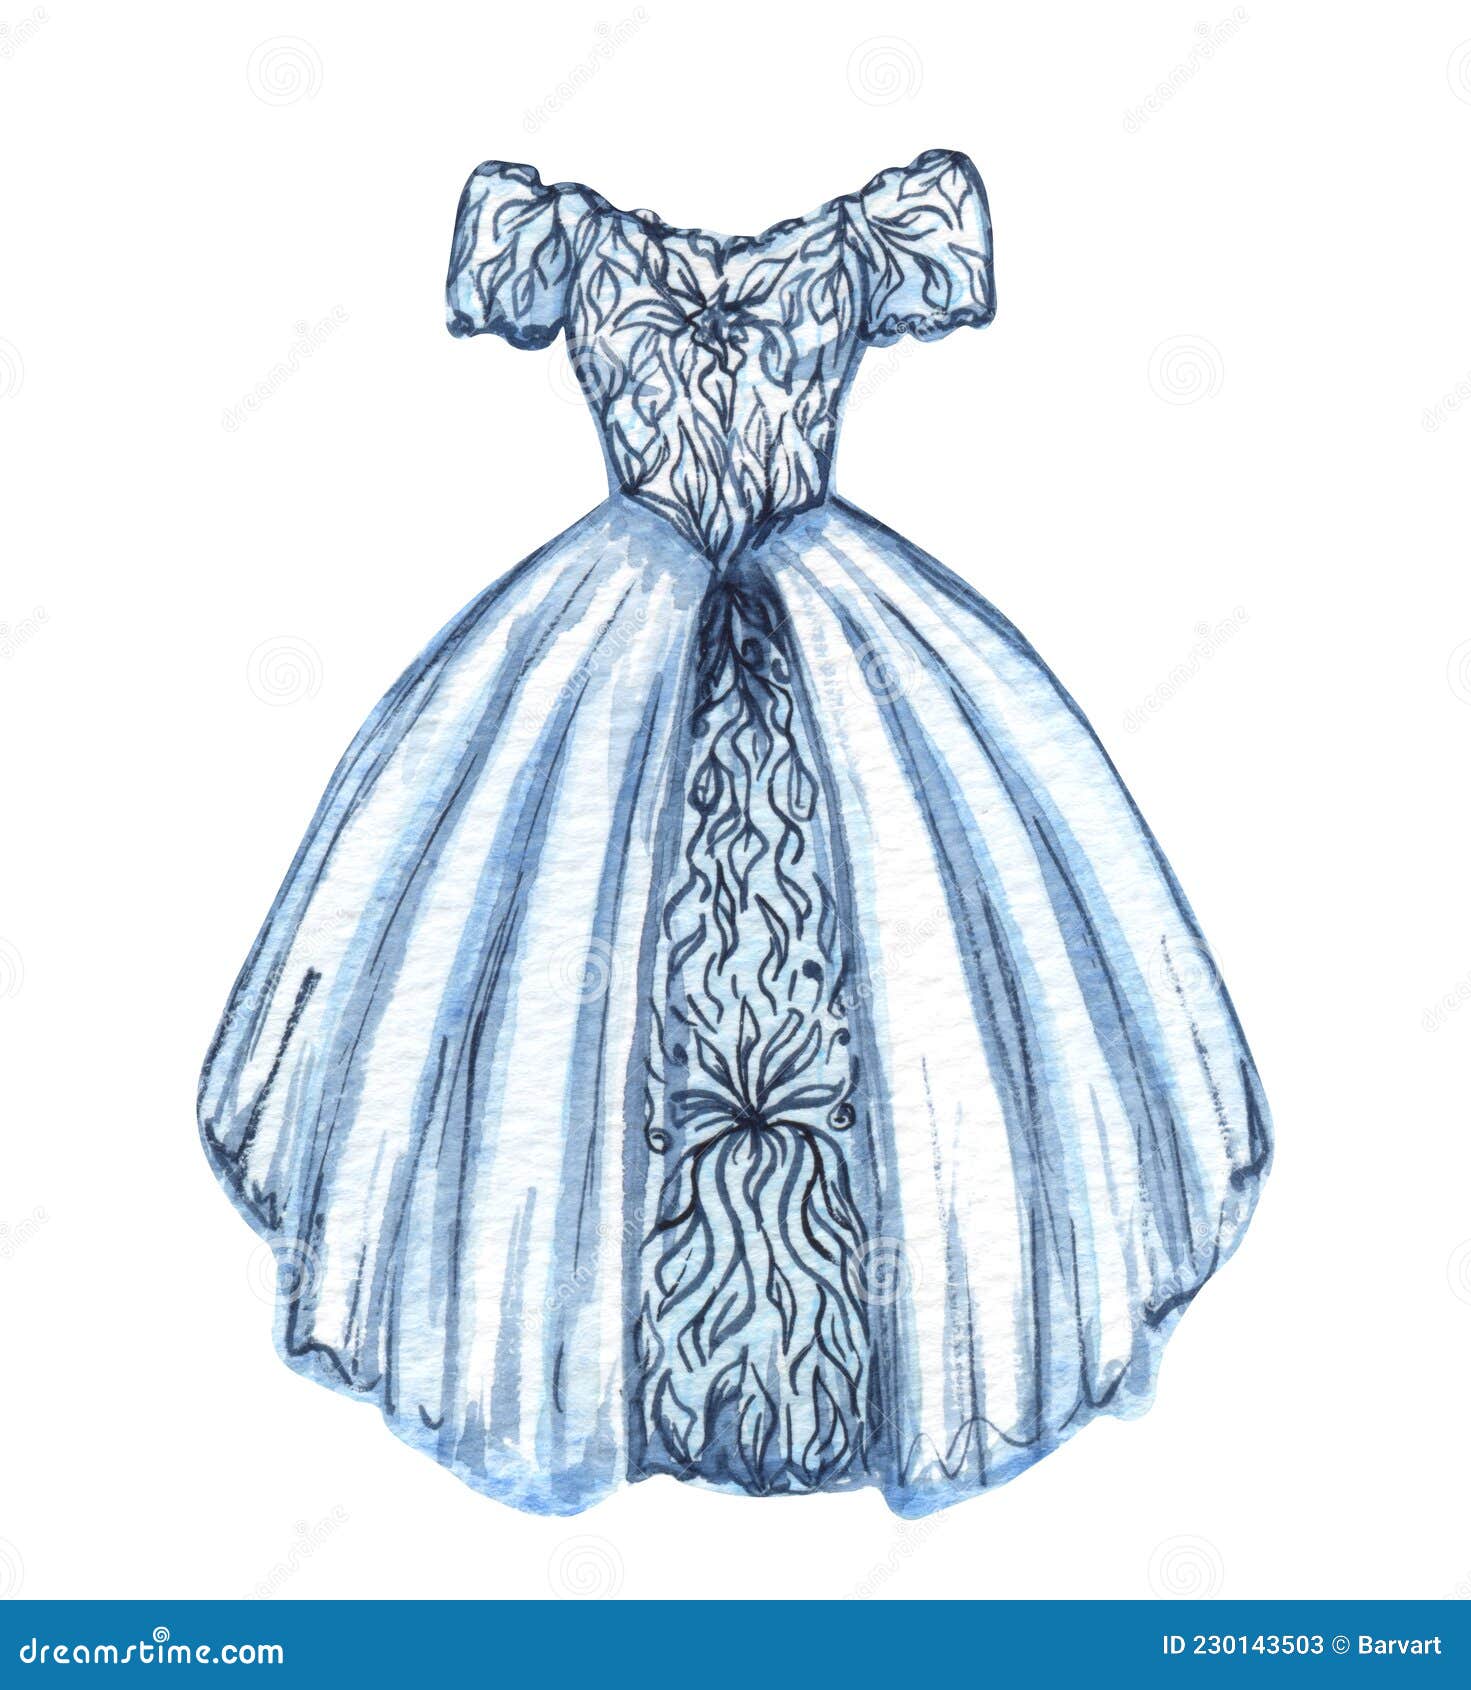 Watercolor Wedding Dress Illustration. Tender Wedding Clothe in Light ...